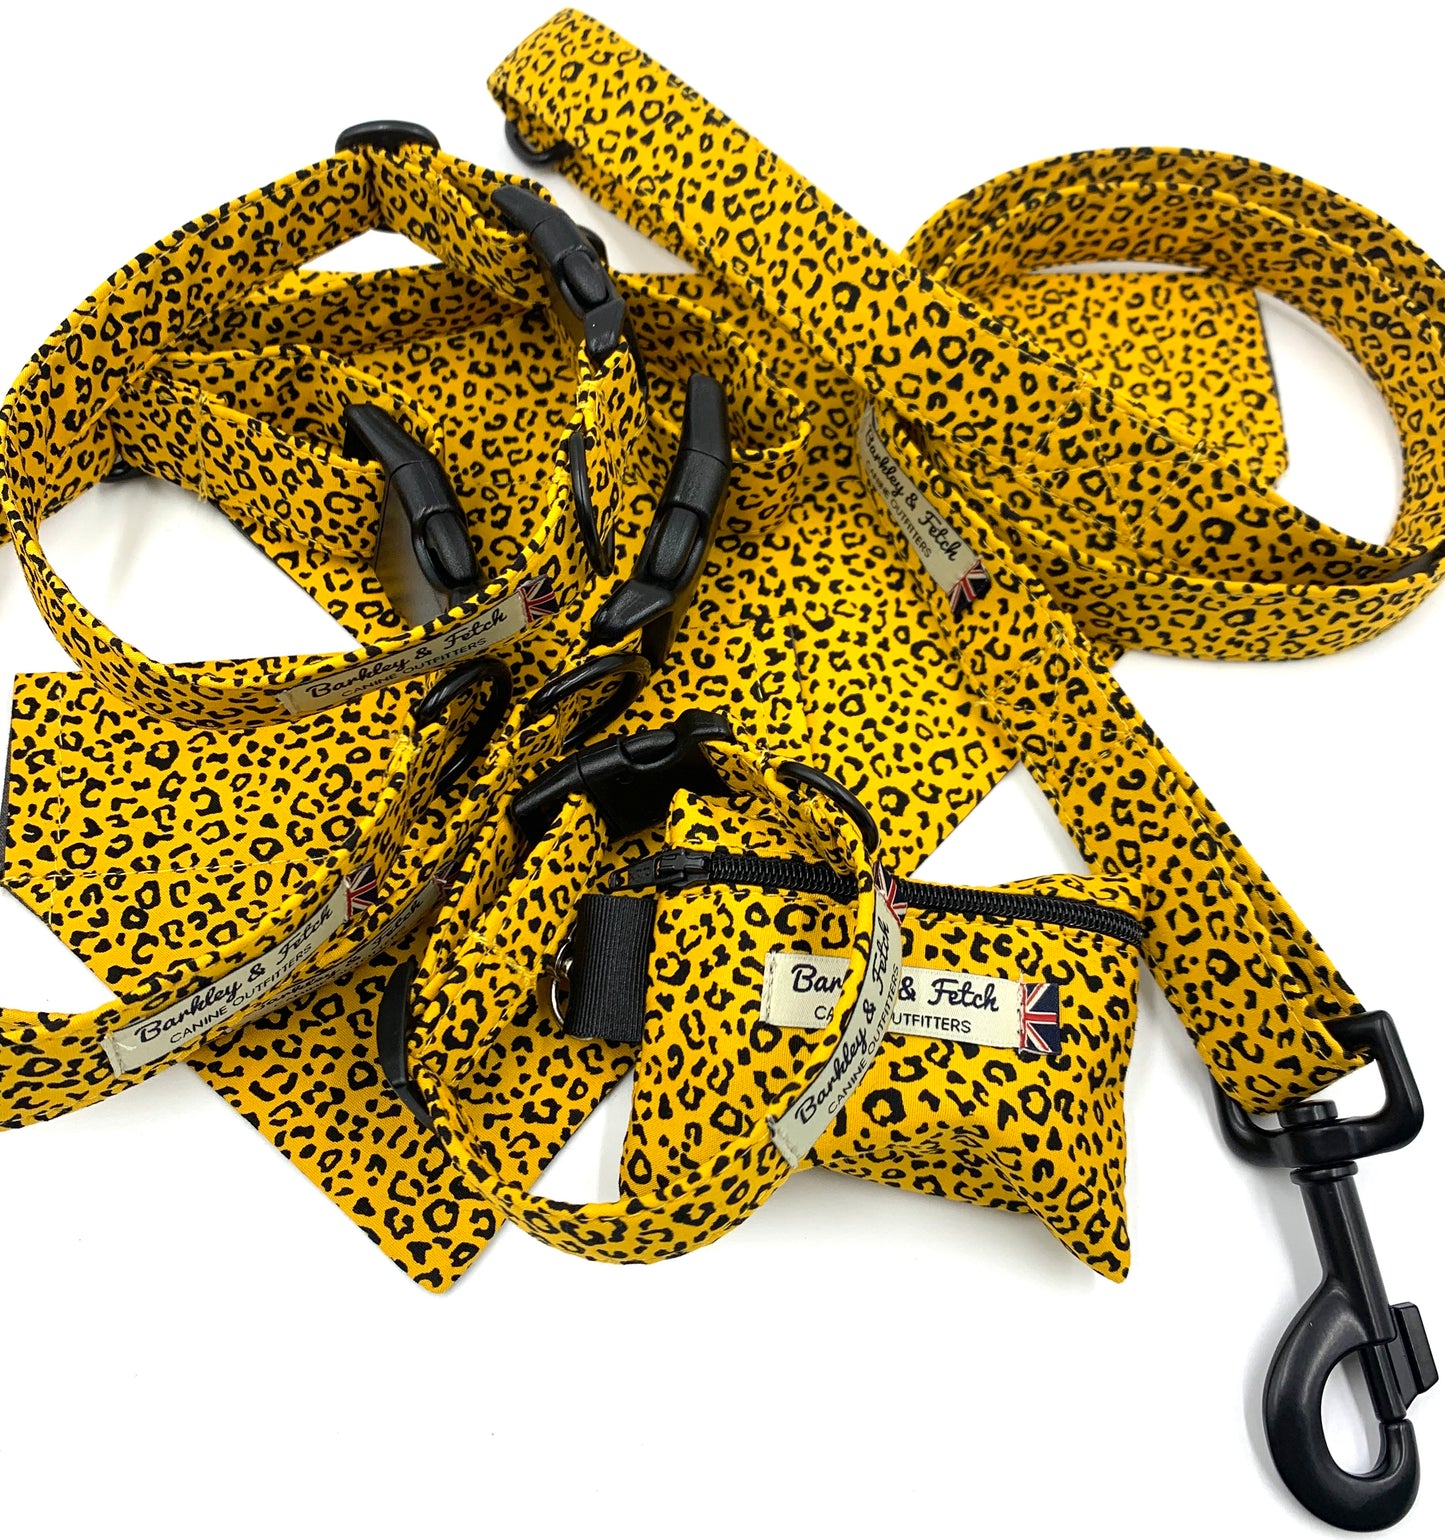 Ochre Leopard Print Dog Collar